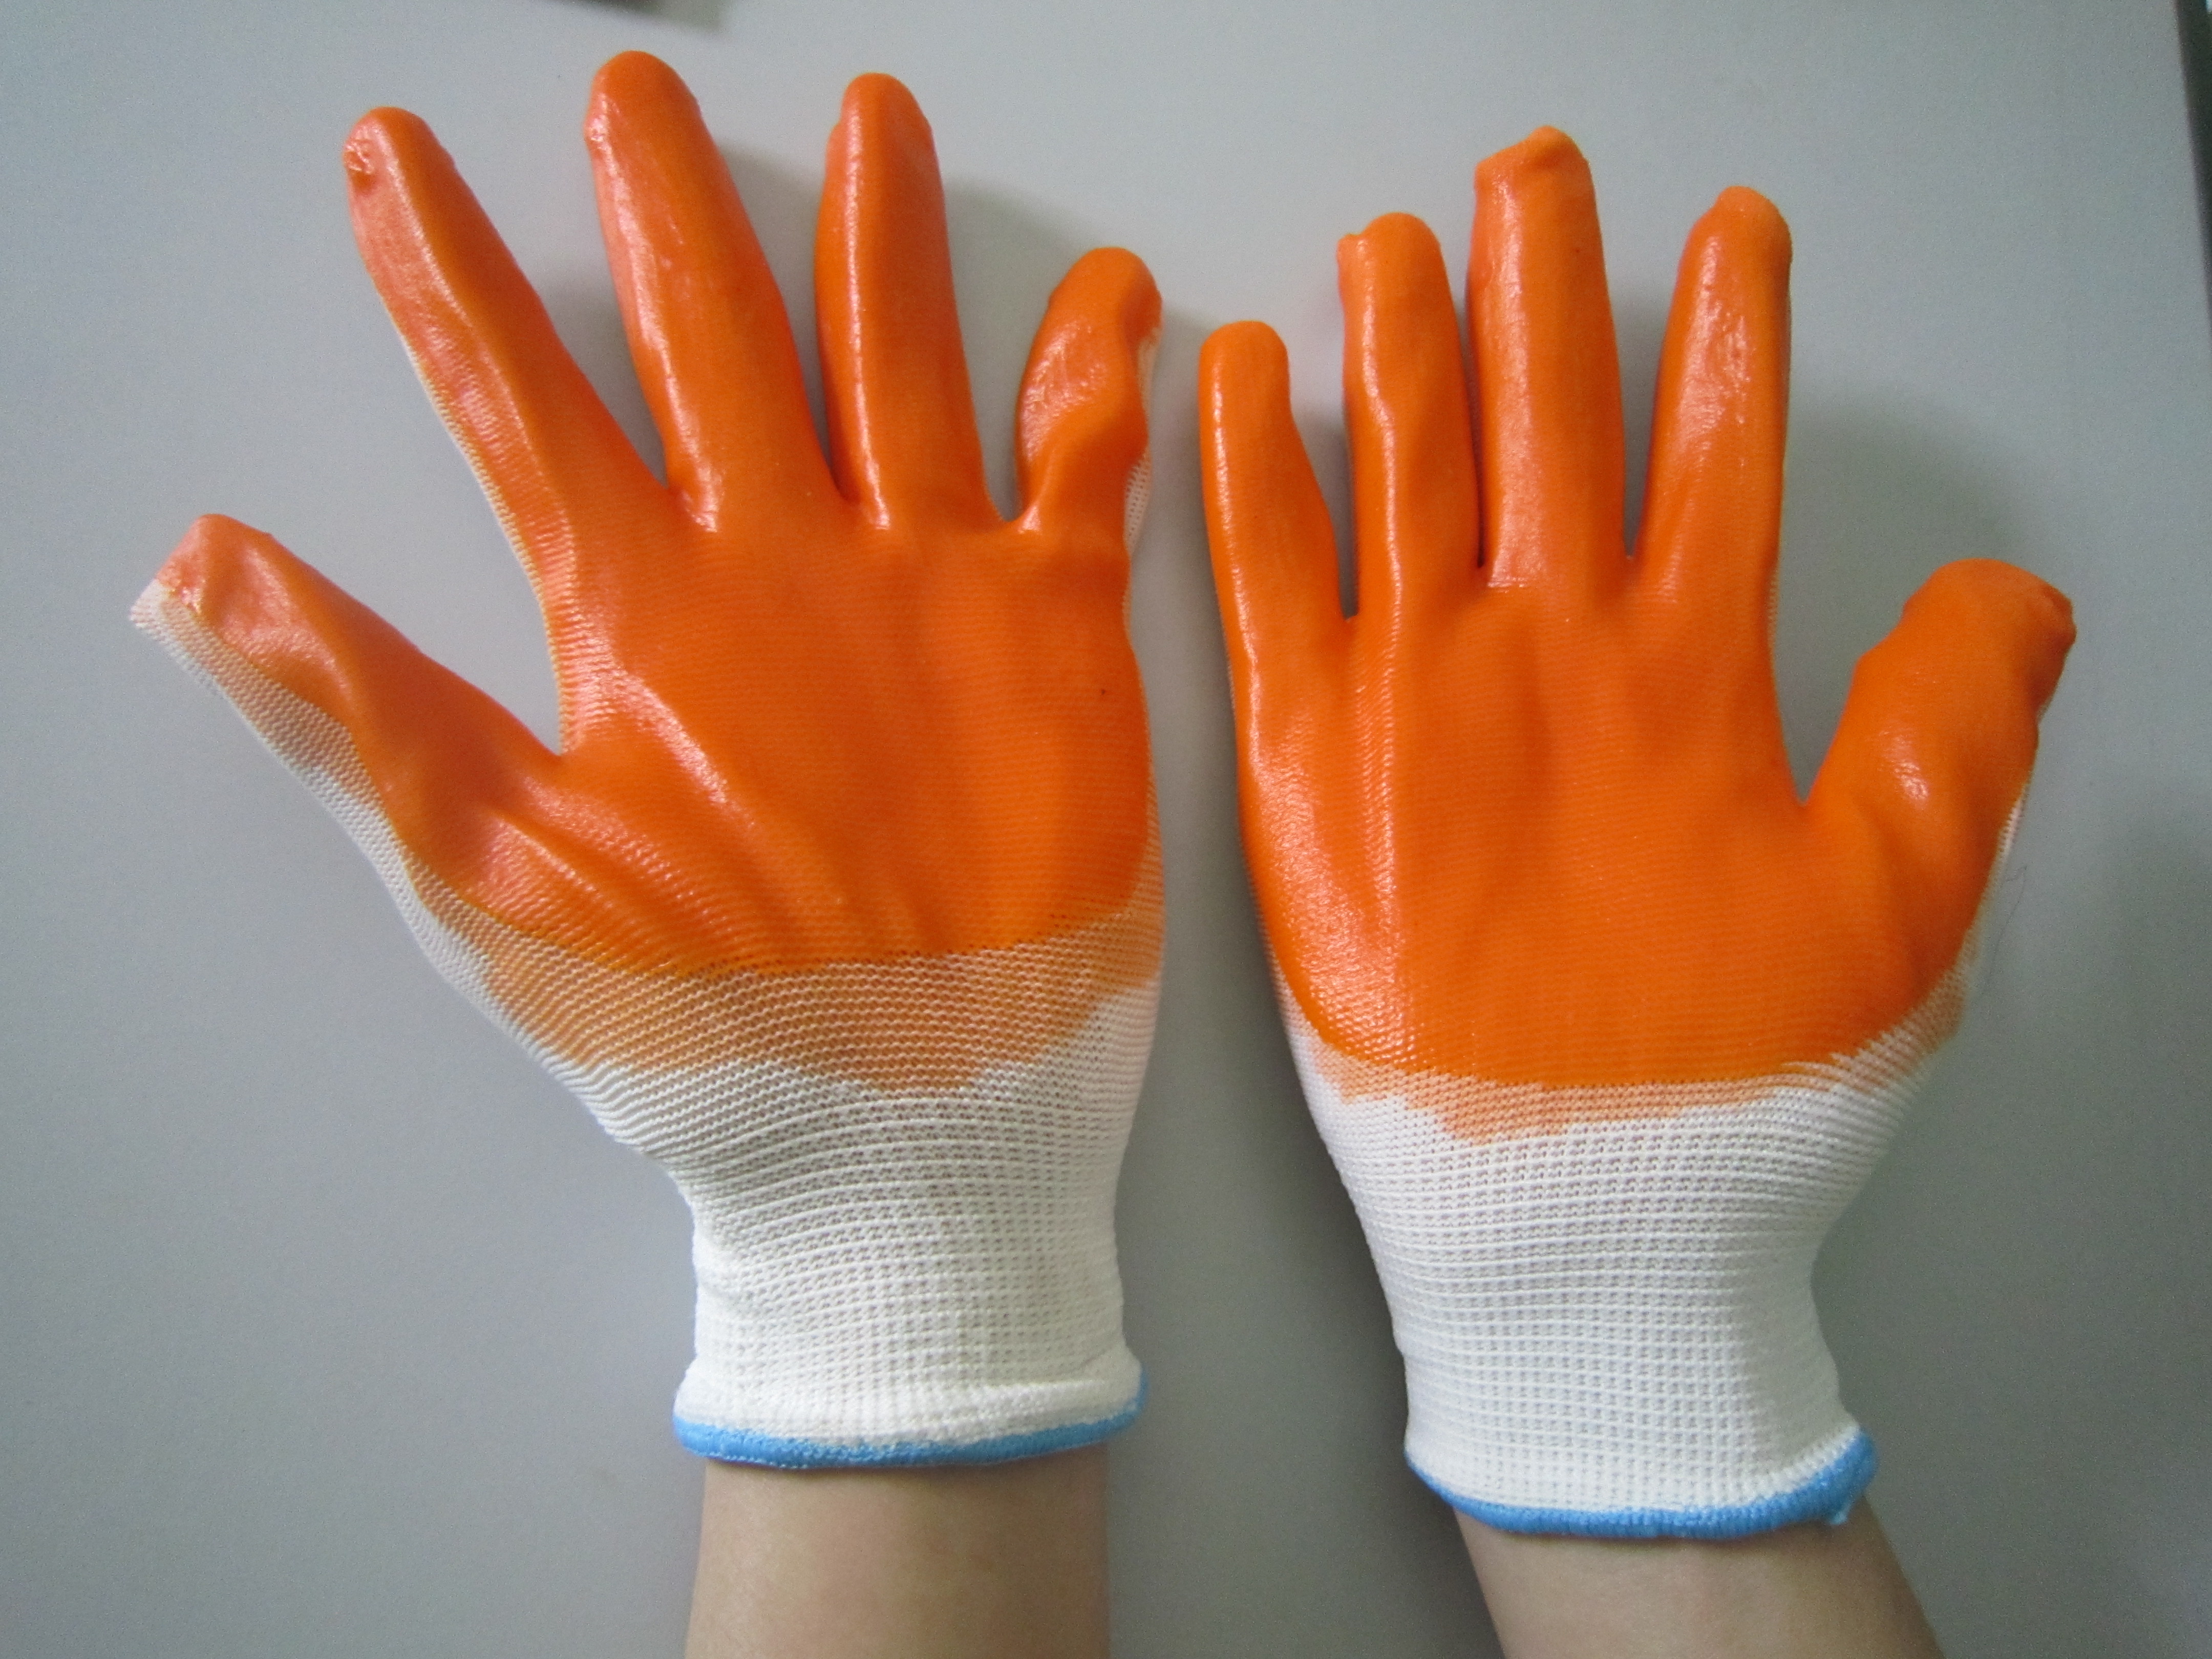 Latex-coated gloves